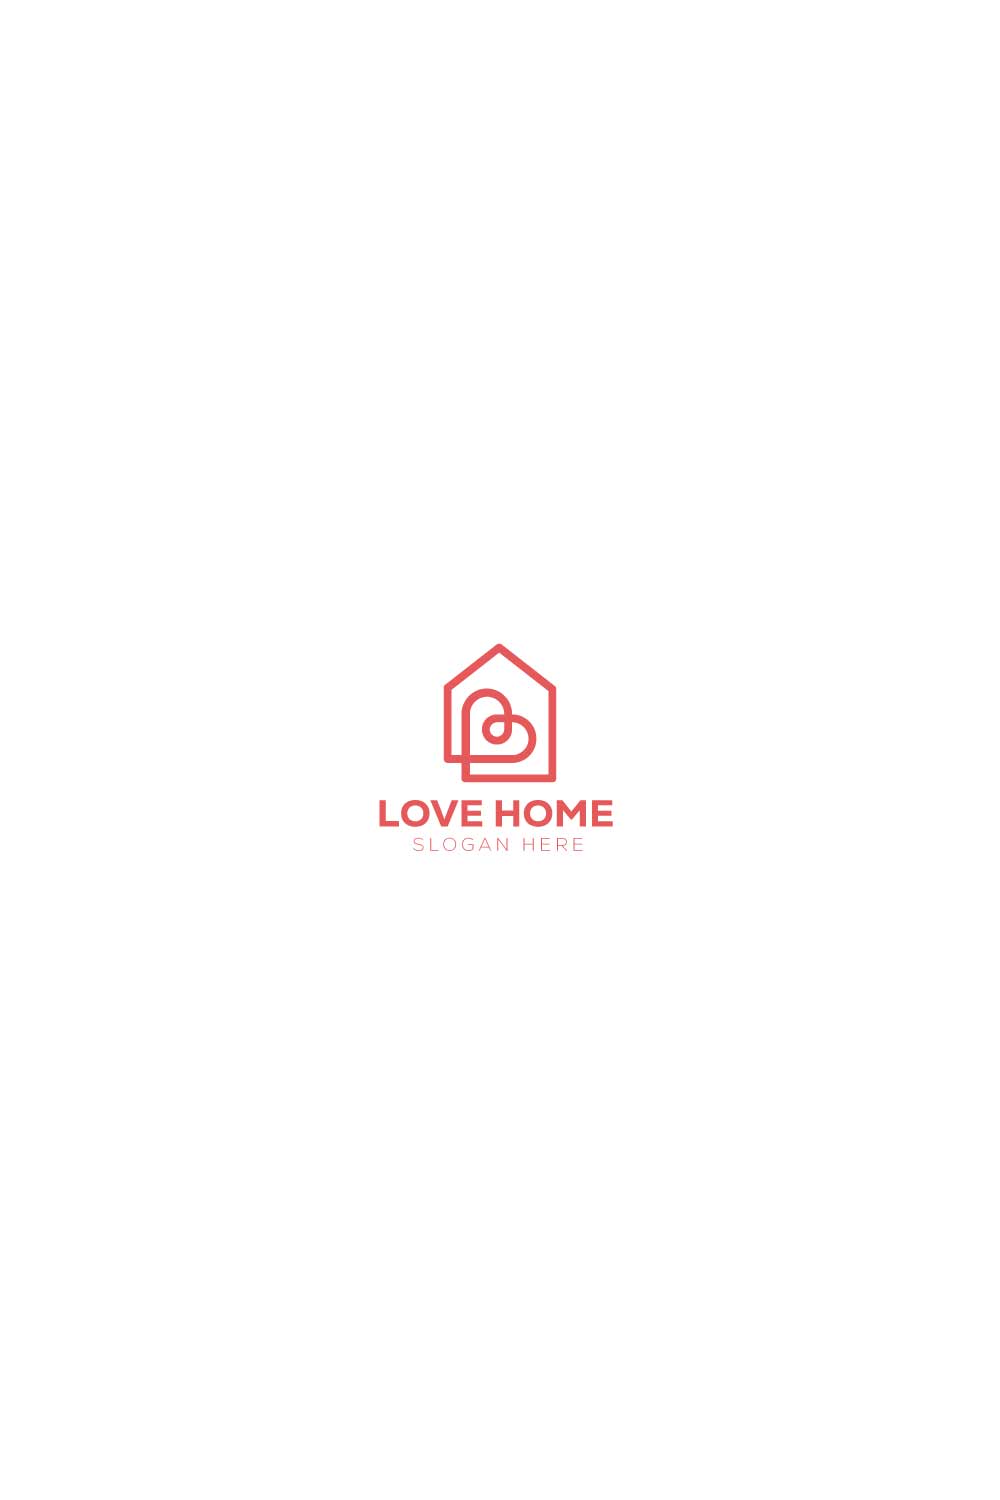 Creative Home Logo Love House logo design pinterest preview image.